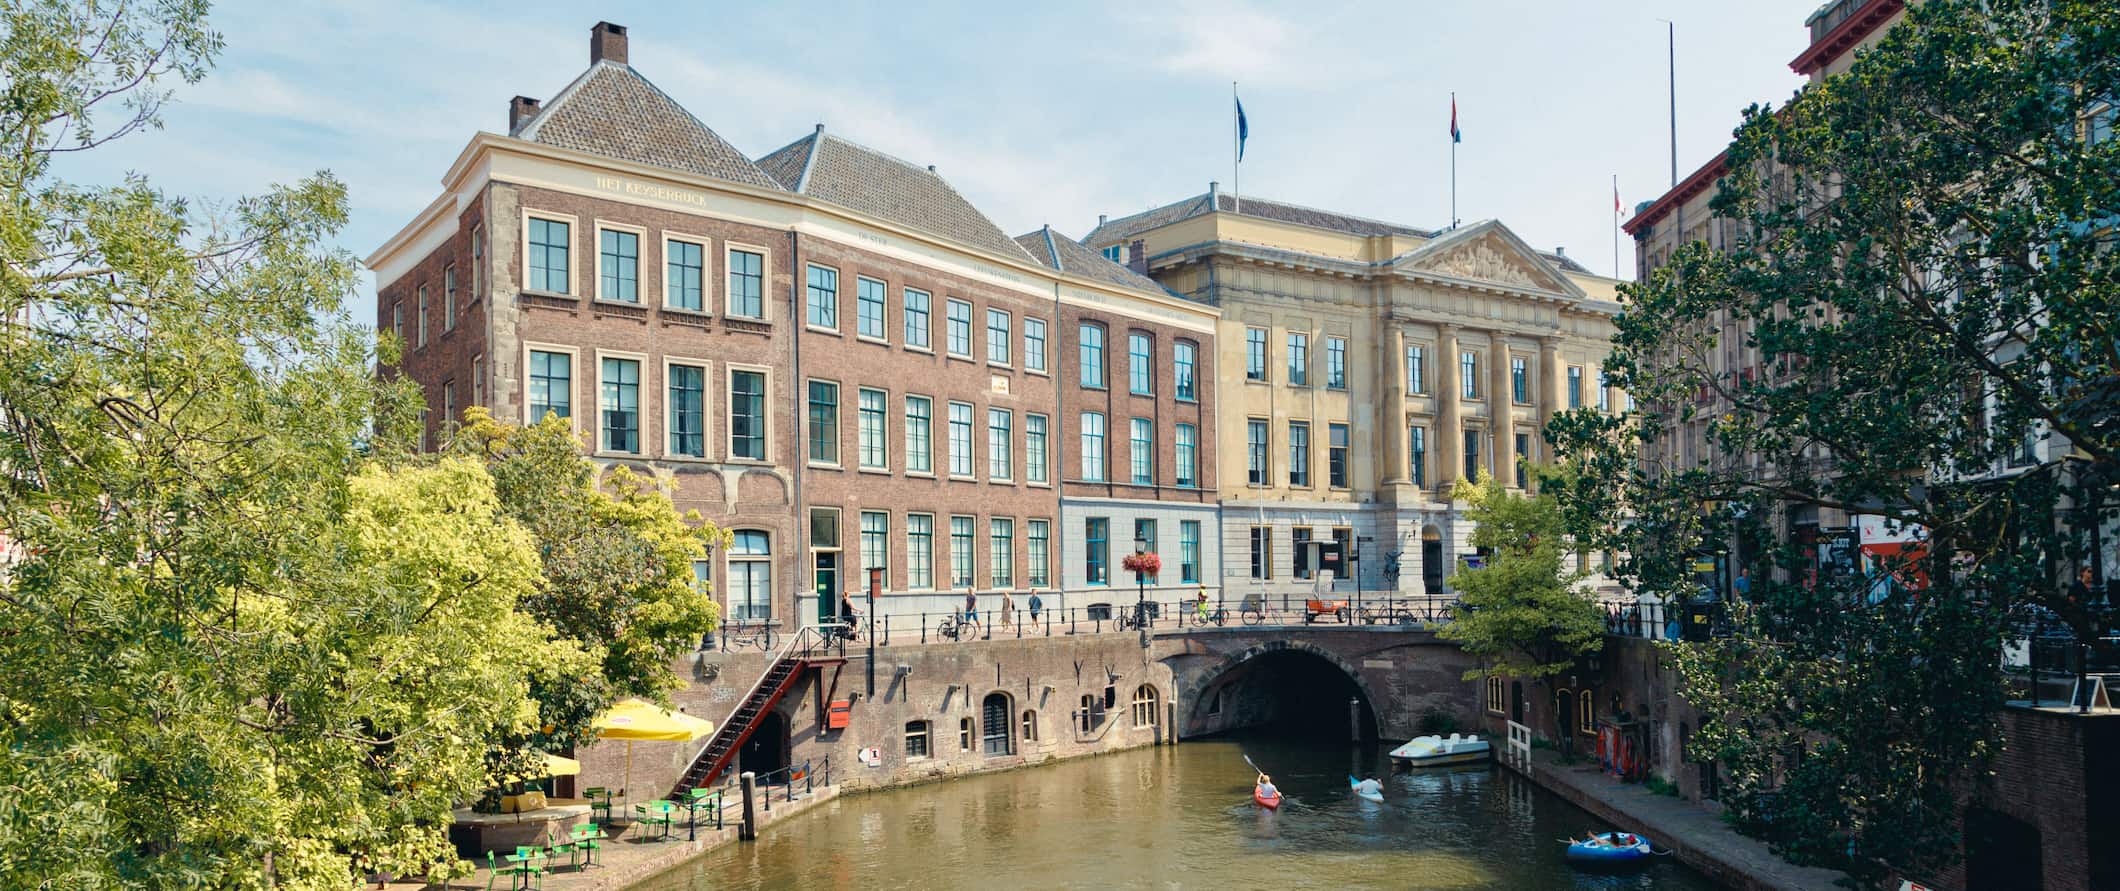 A view of a narrow, winding canal in Utrecht, Netherlands